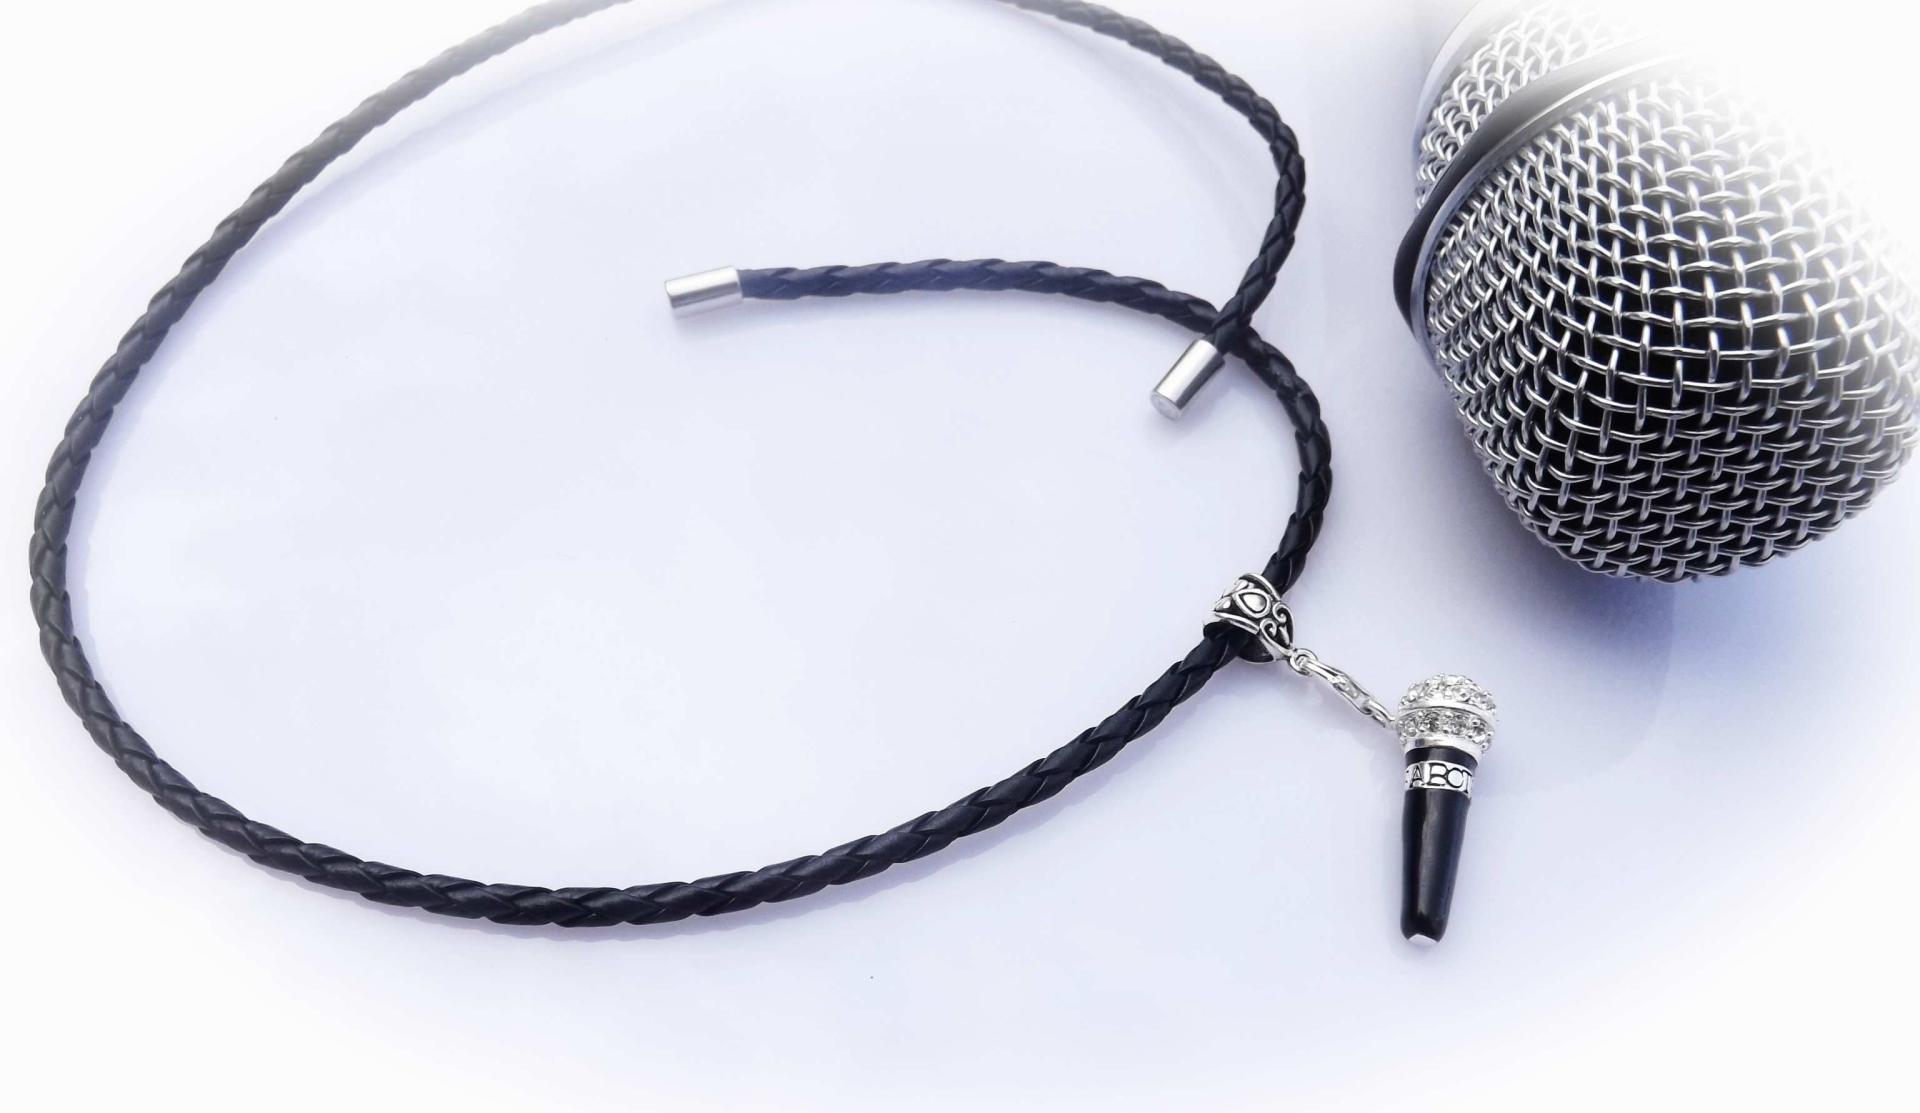 Microphone Choker Necklace "Slimline" style